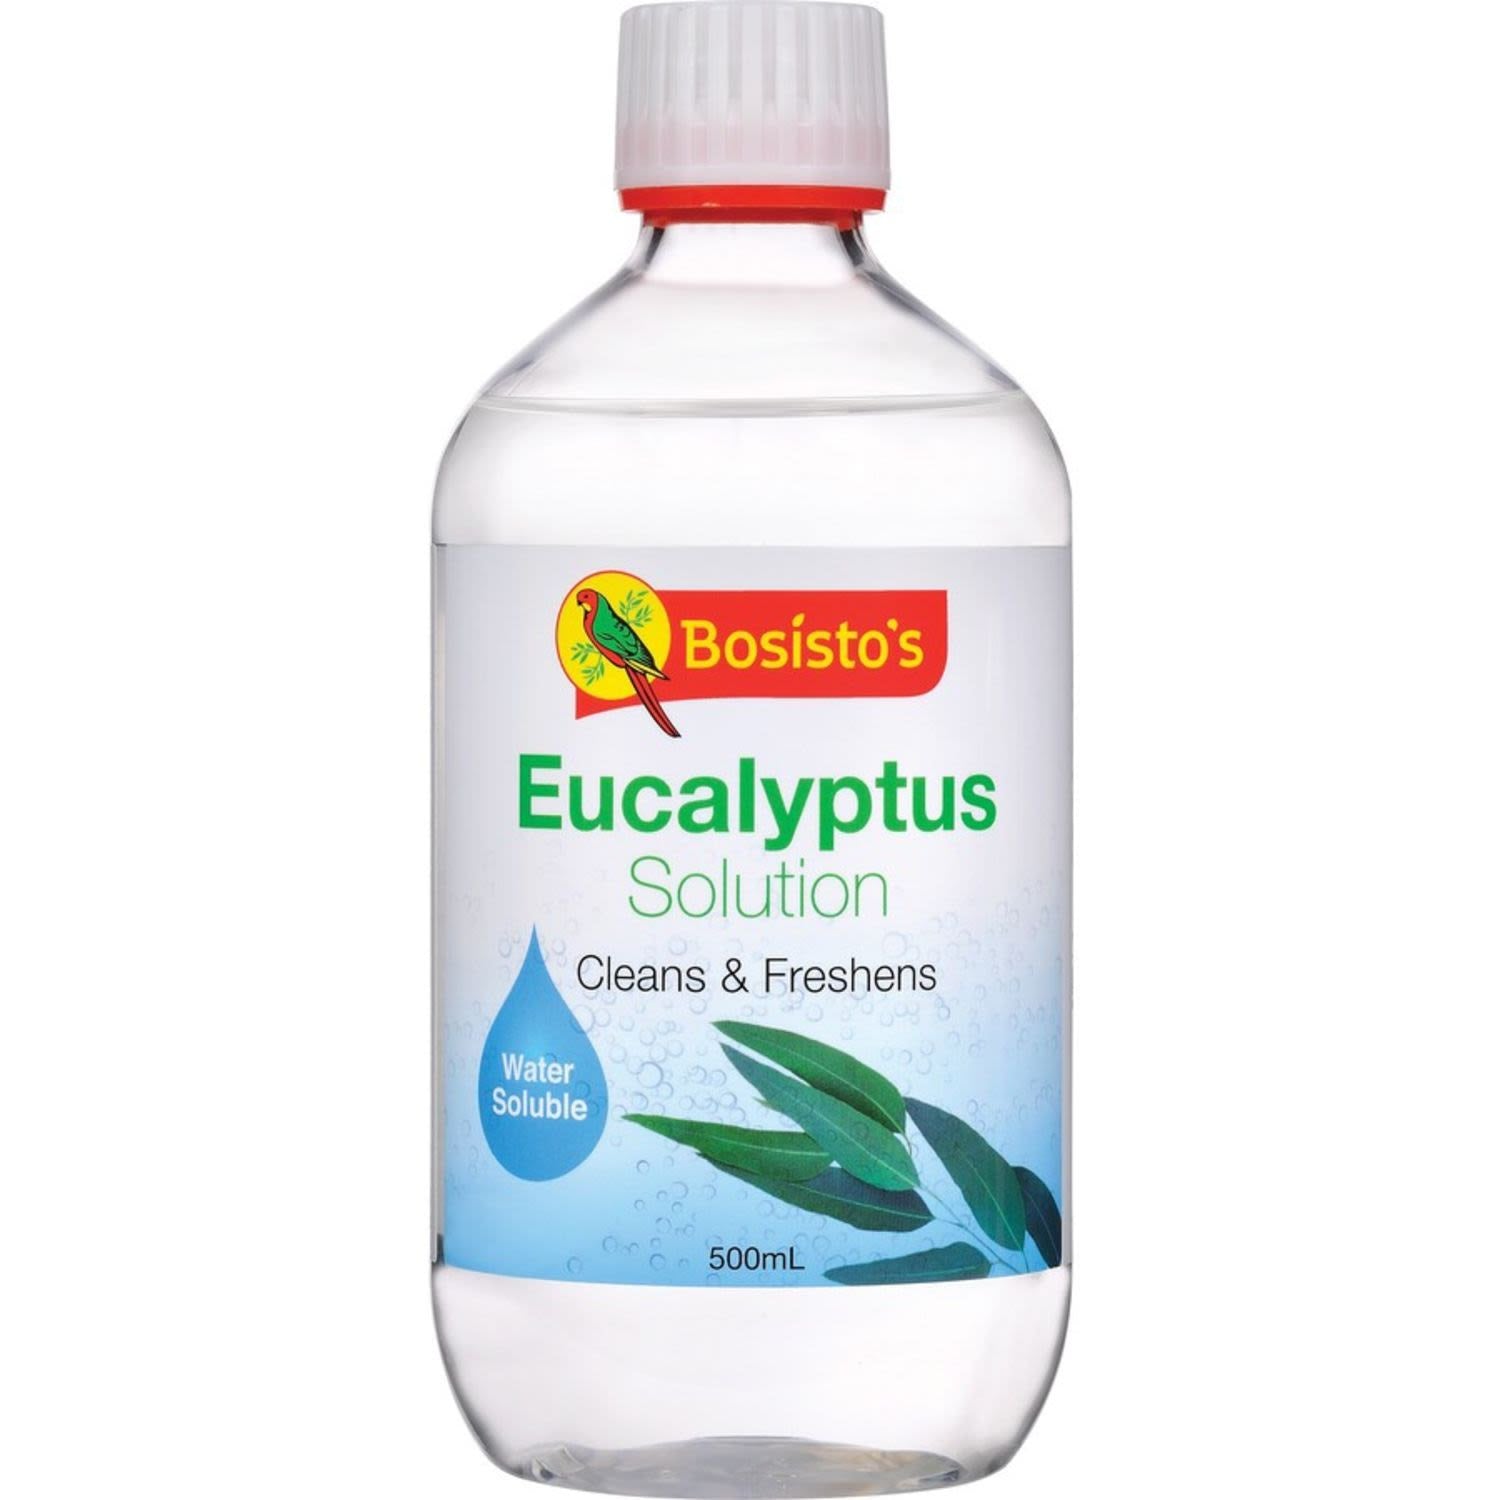 Bosistos Eucalyptus Solution Oil 500ml